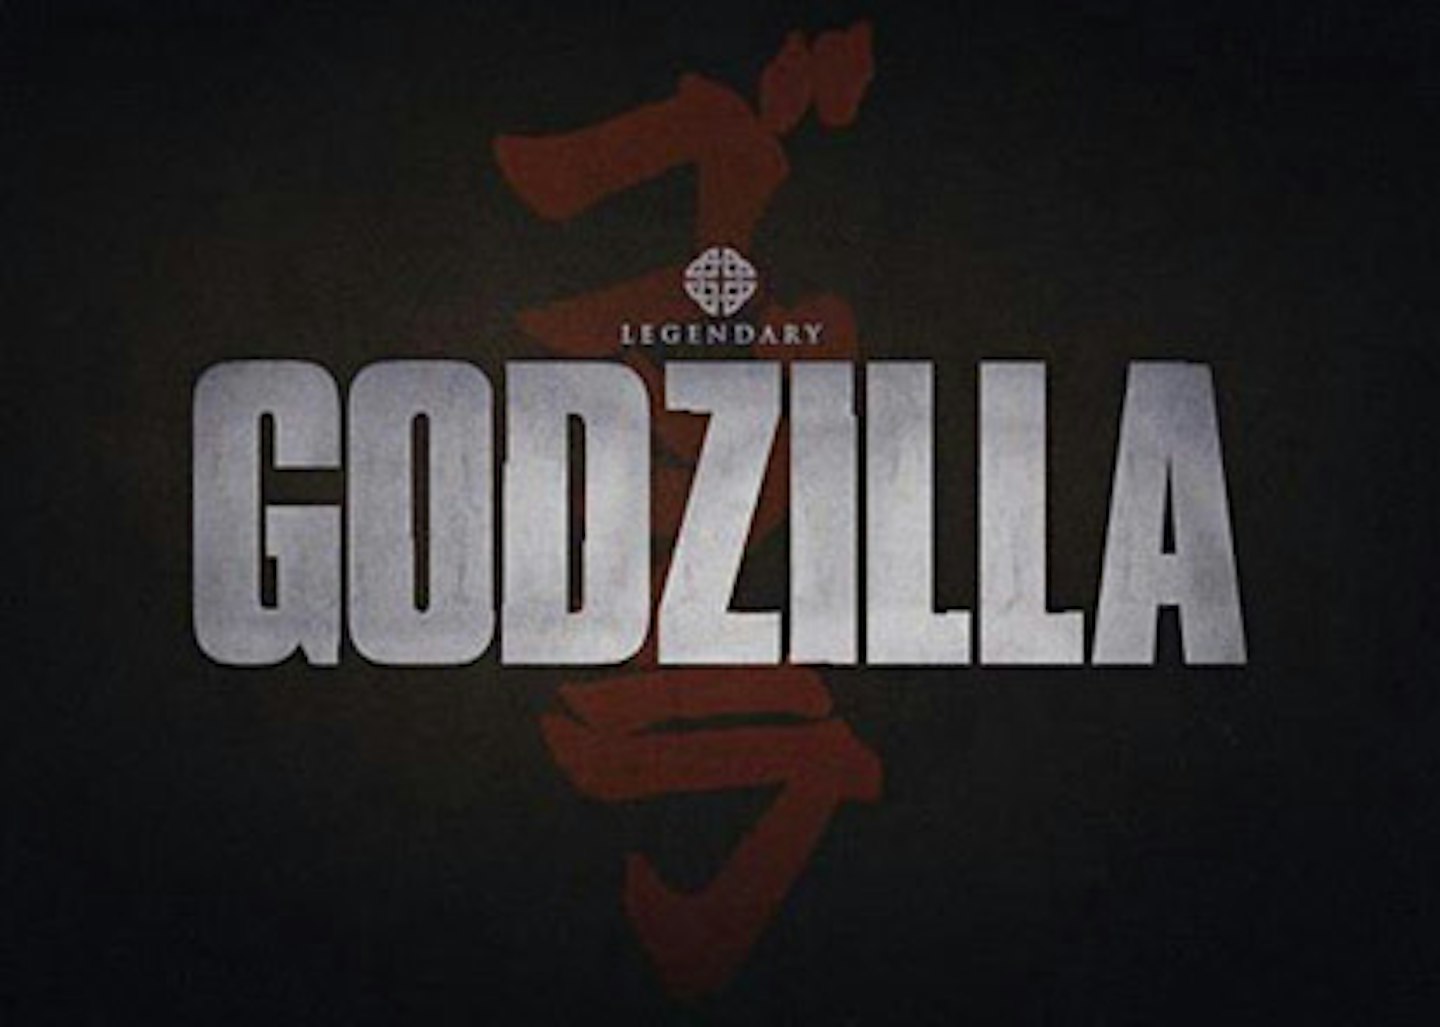 Drew Pearce Rewriting Godzilla